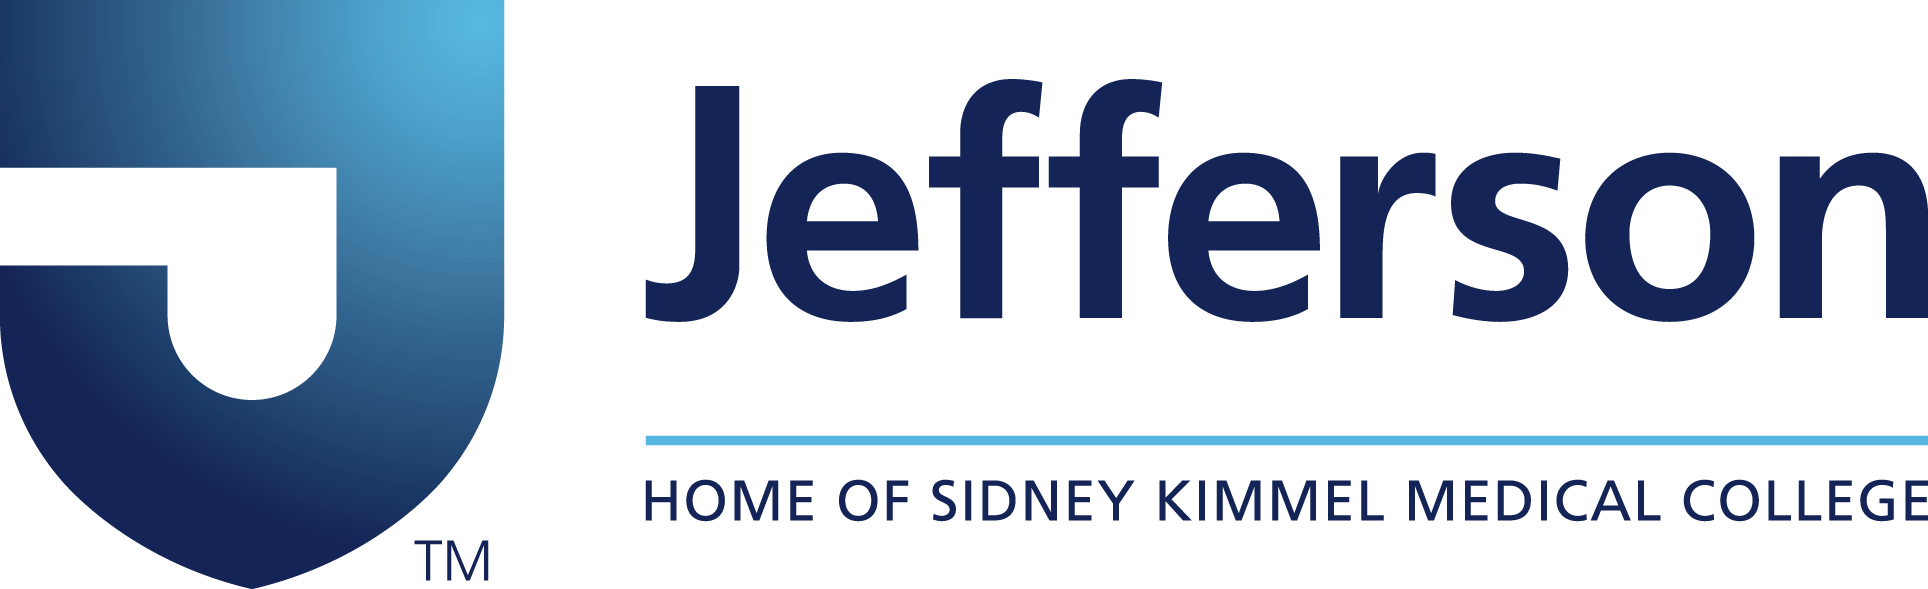 Thomas Jefferson University and Jefferson Health